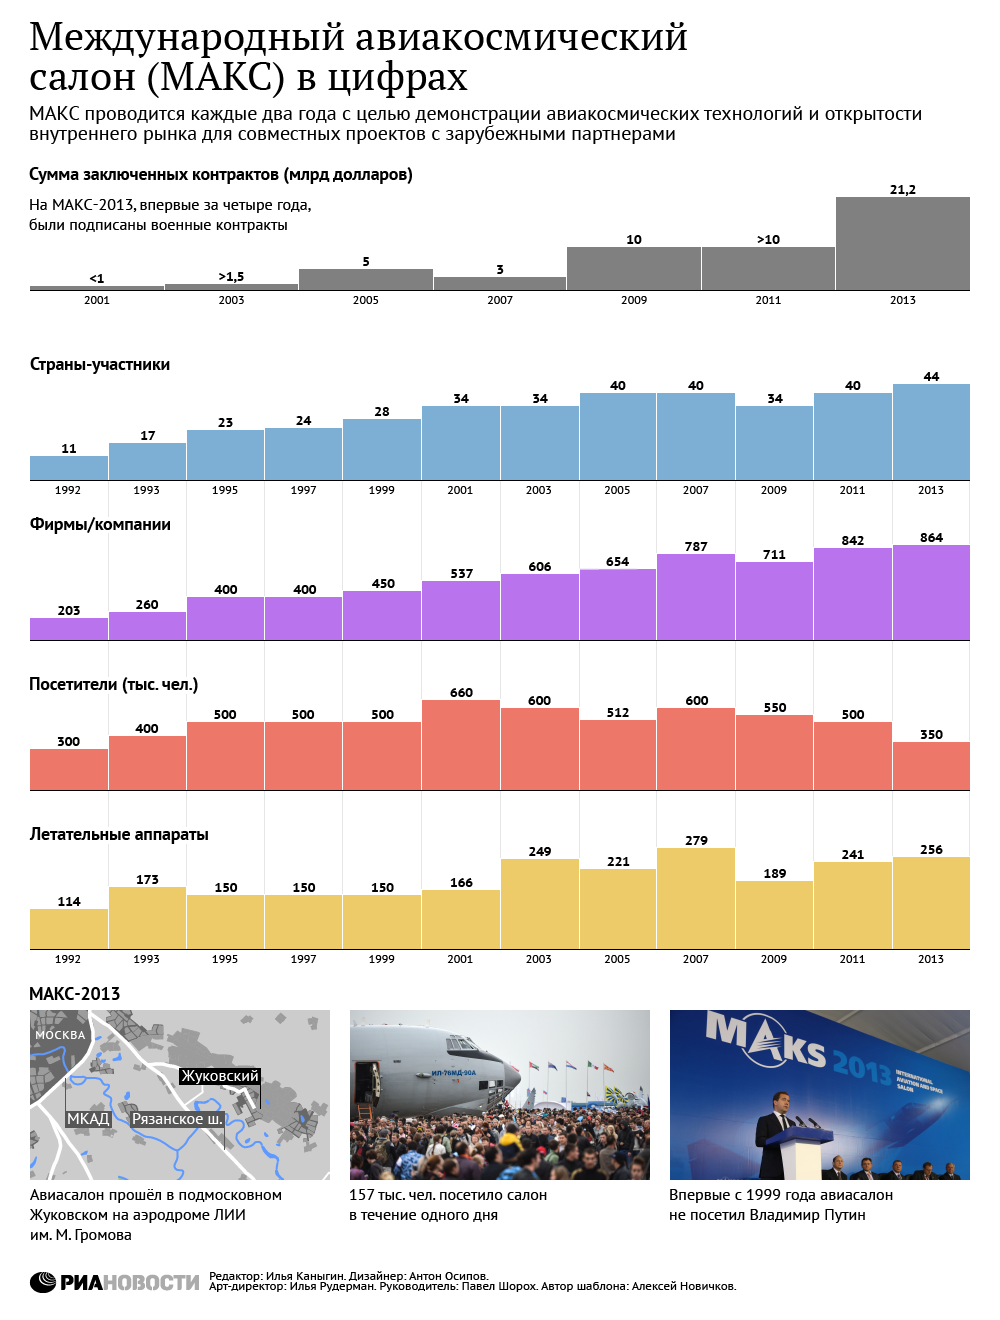 Авиасалон МАКС-2013 в цифрах